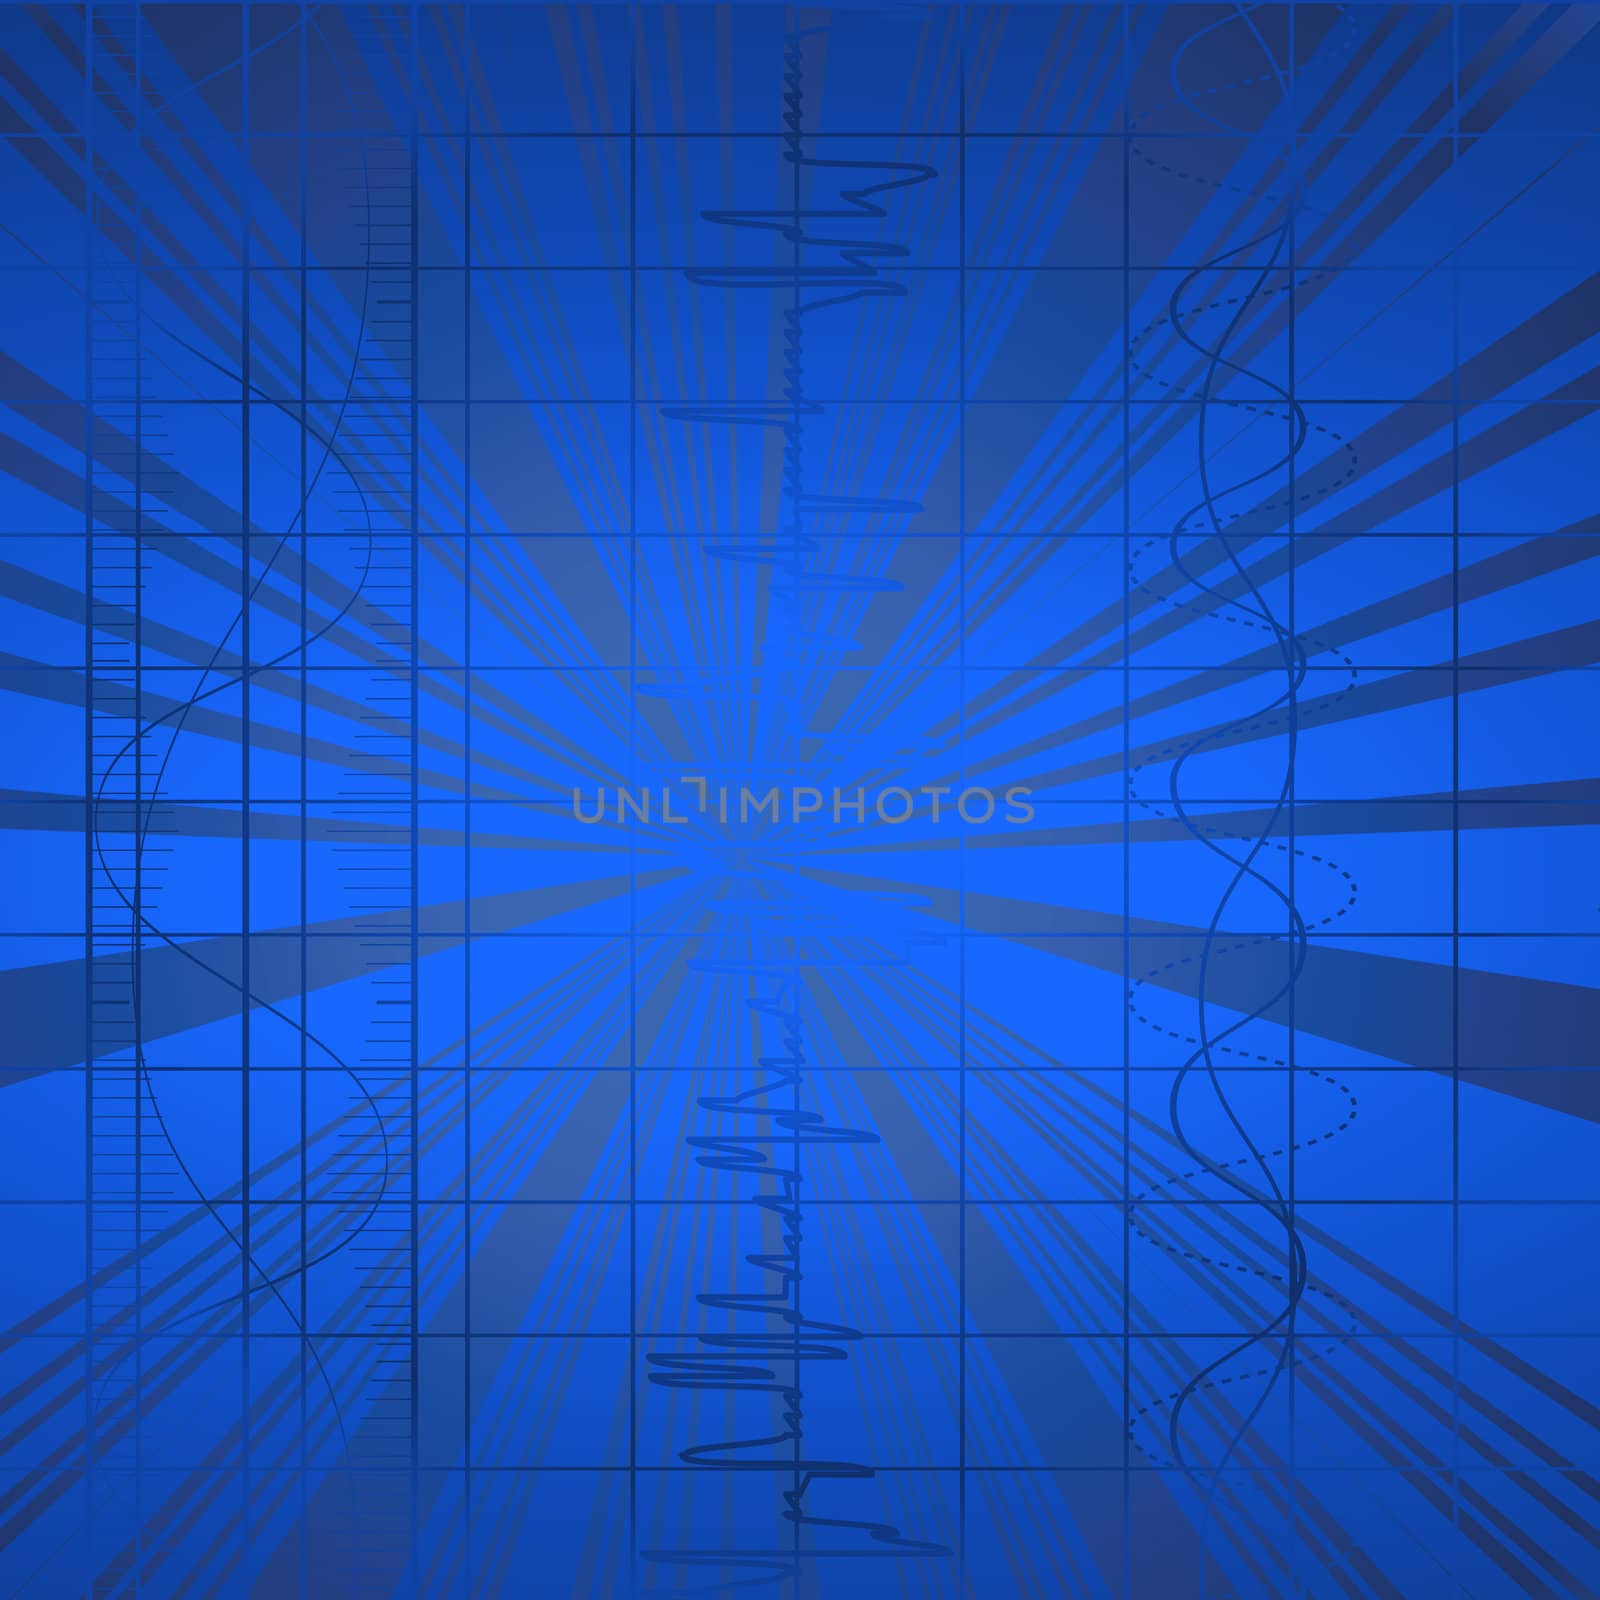 Hi tech blue background, abstract art